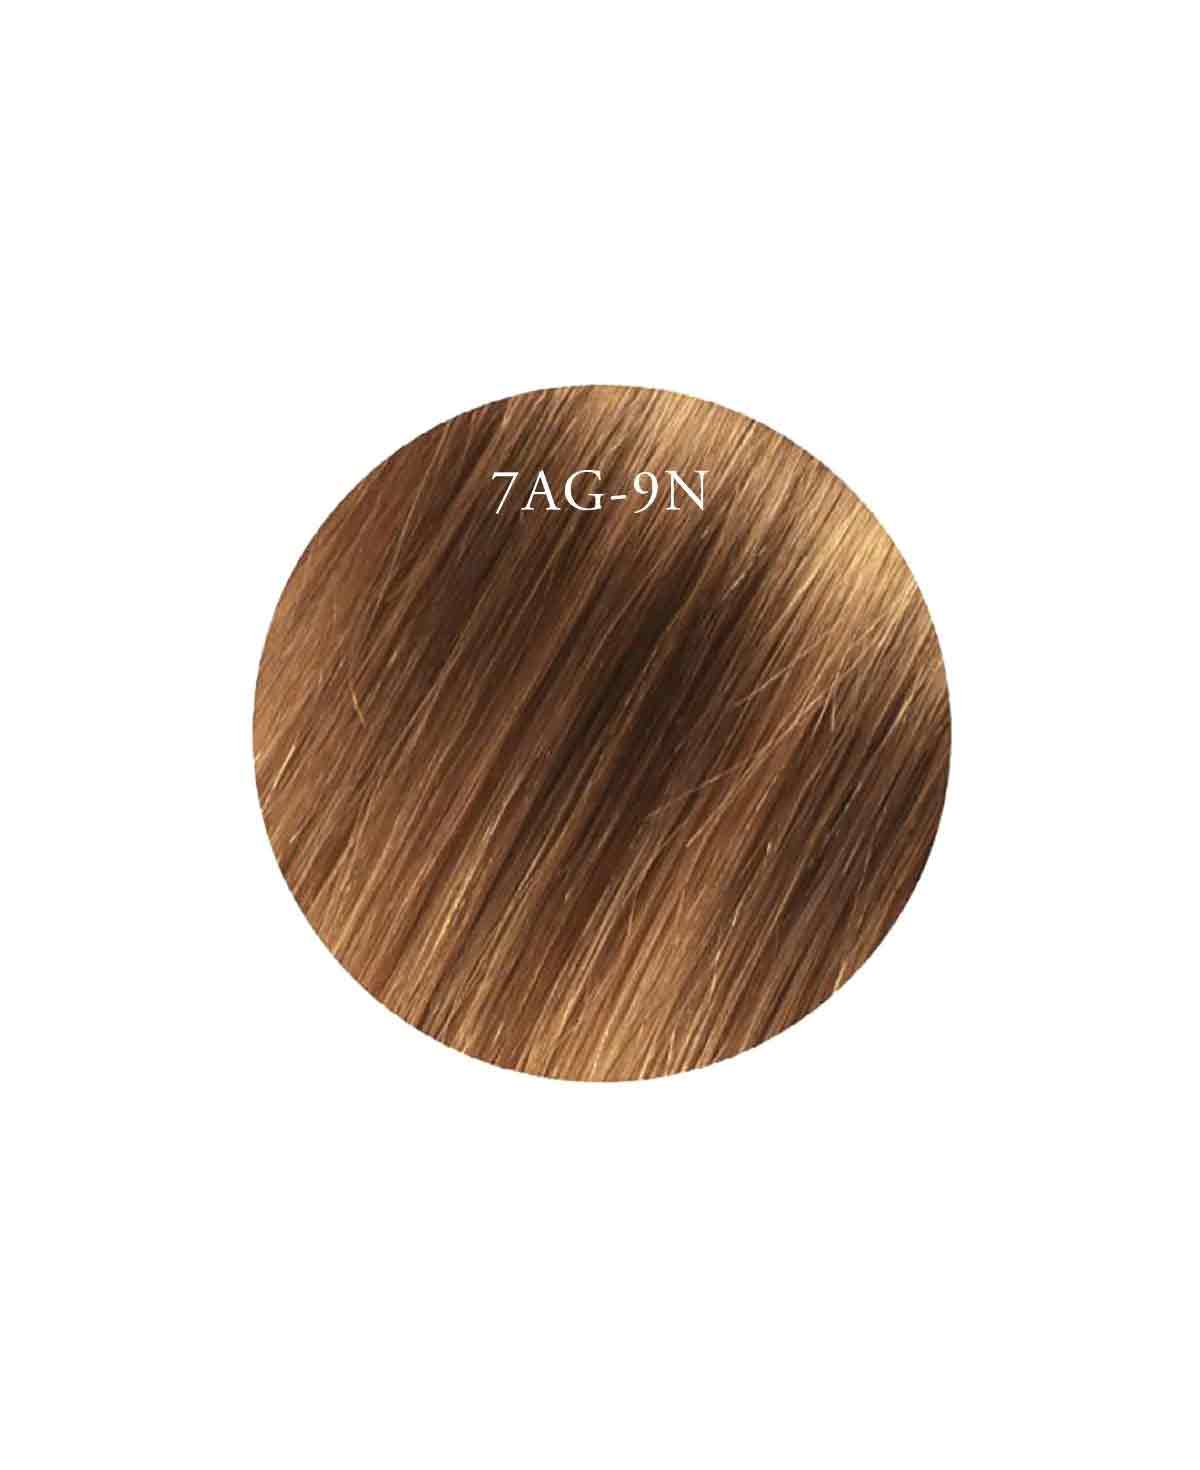 Showpony 45-50cm (20") 3 in 1 HALO Hair Exstension - 7AG-9N Dark Bronde Highlight